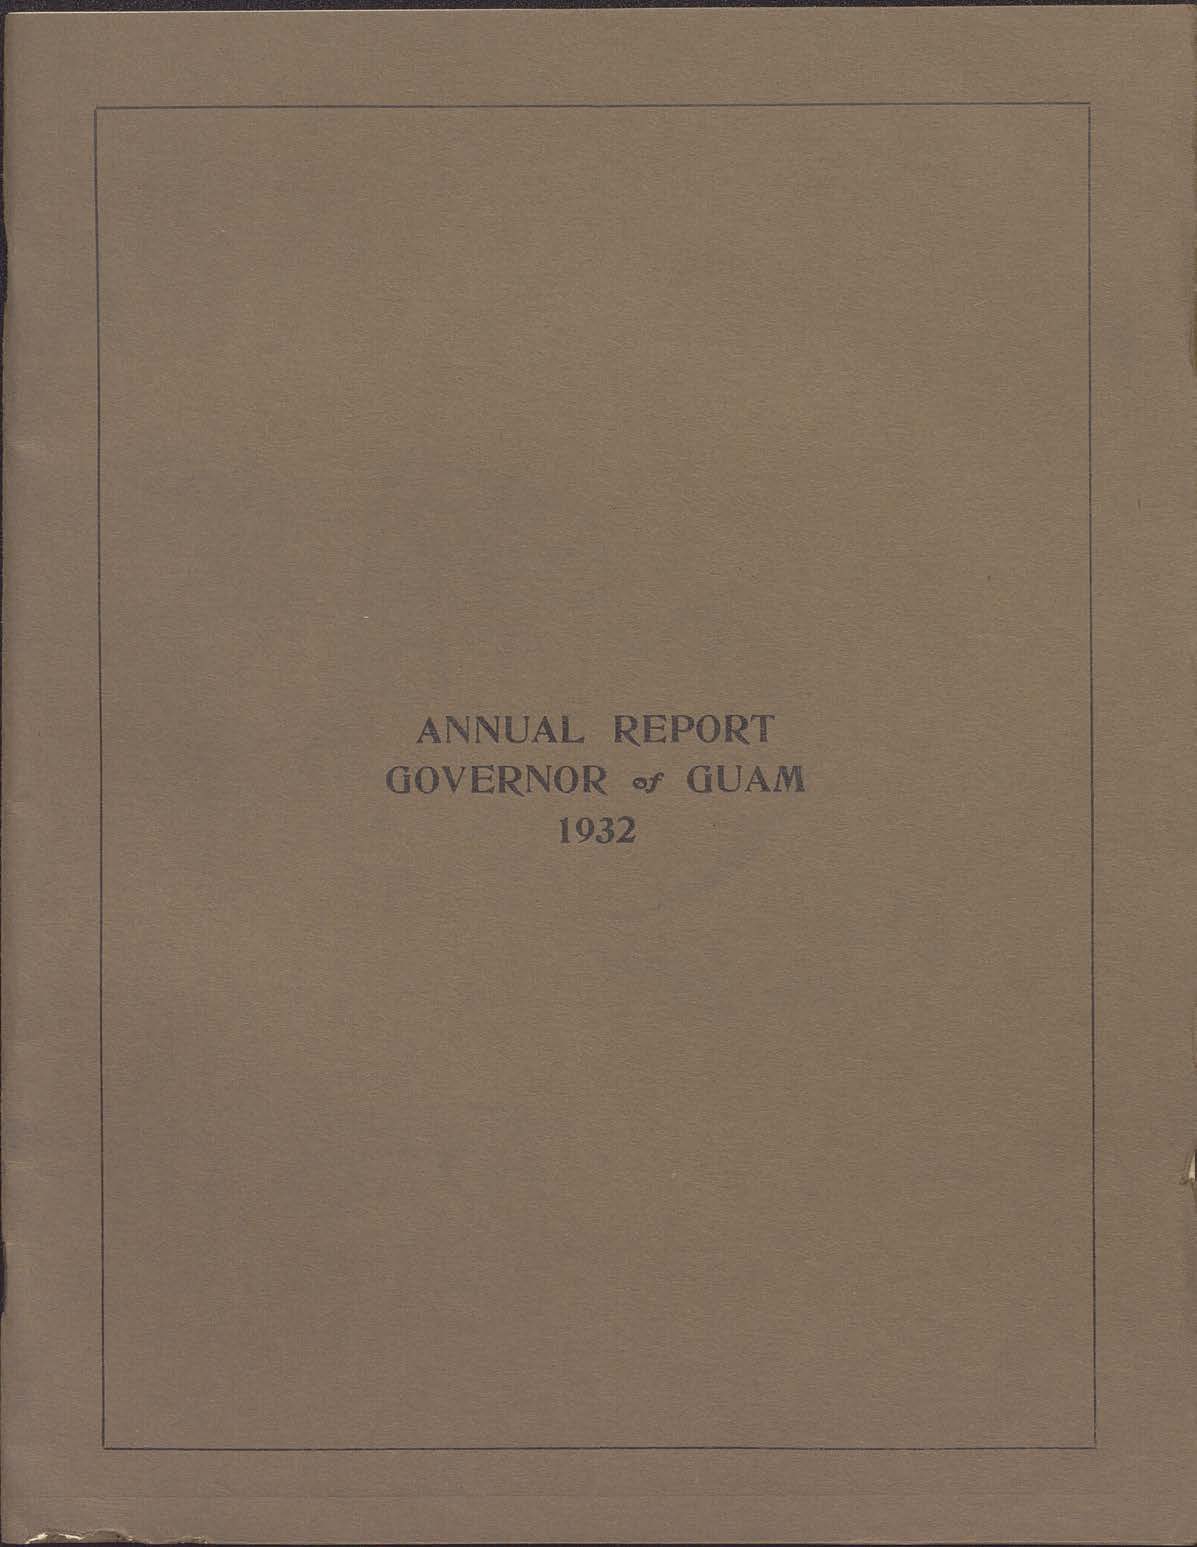 Annual Report - Governor of Guam